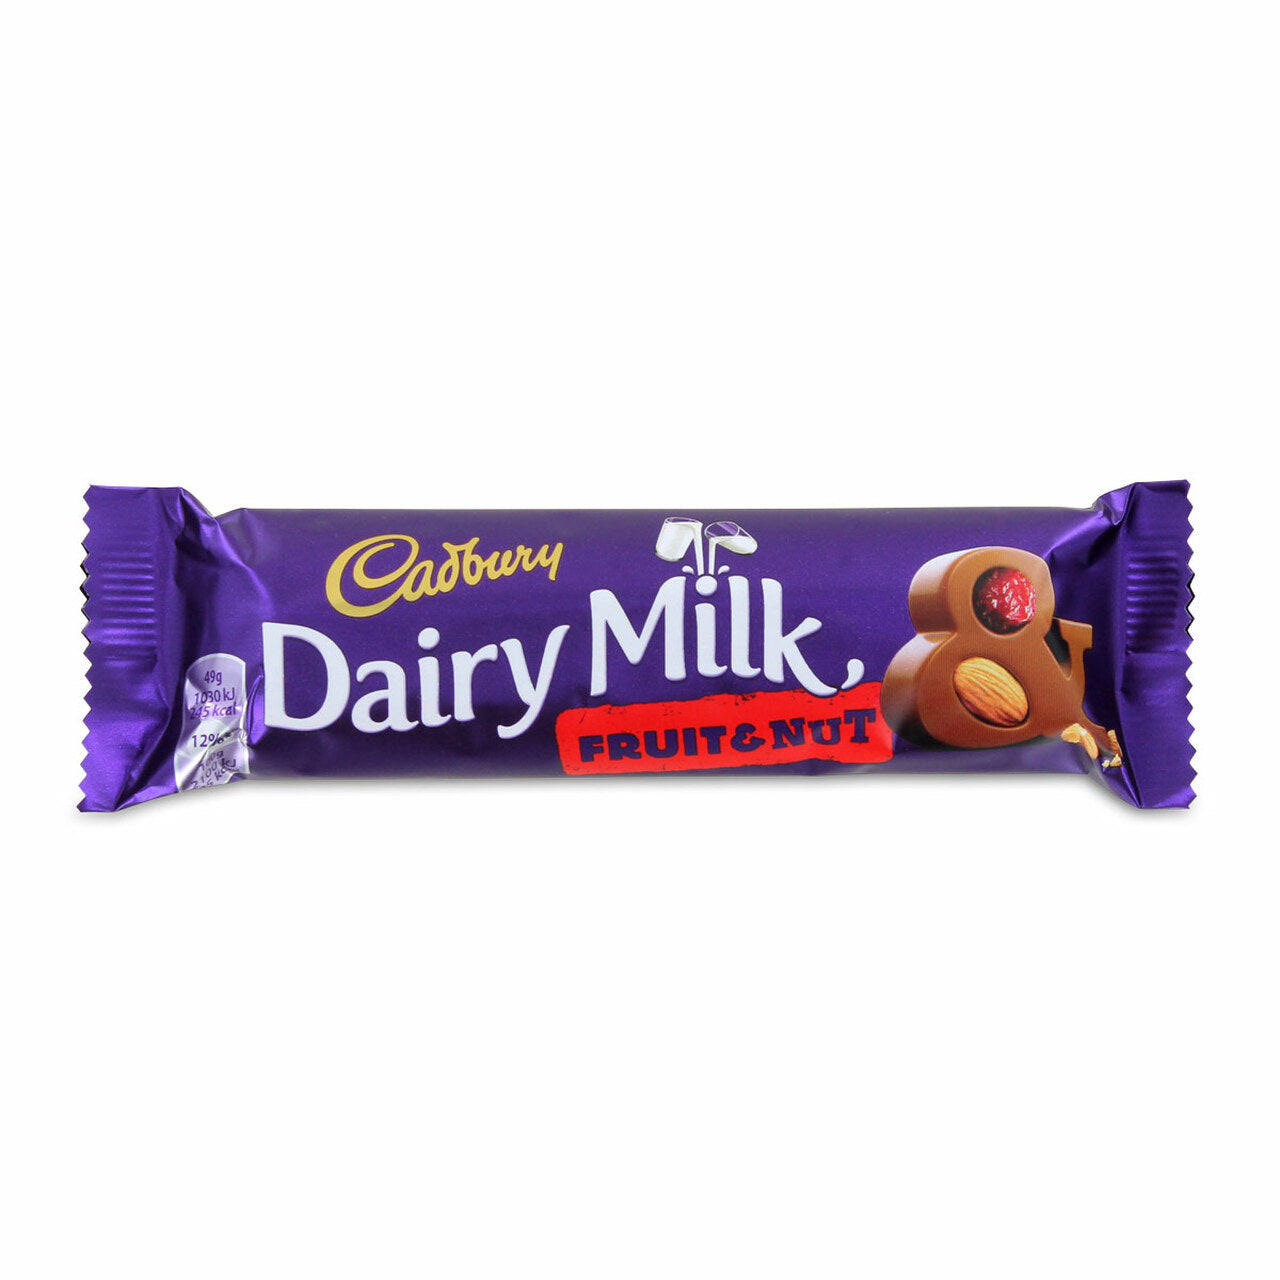 Cadbury Dairy Milk, Fruit & Nut - 1.8 oz bar